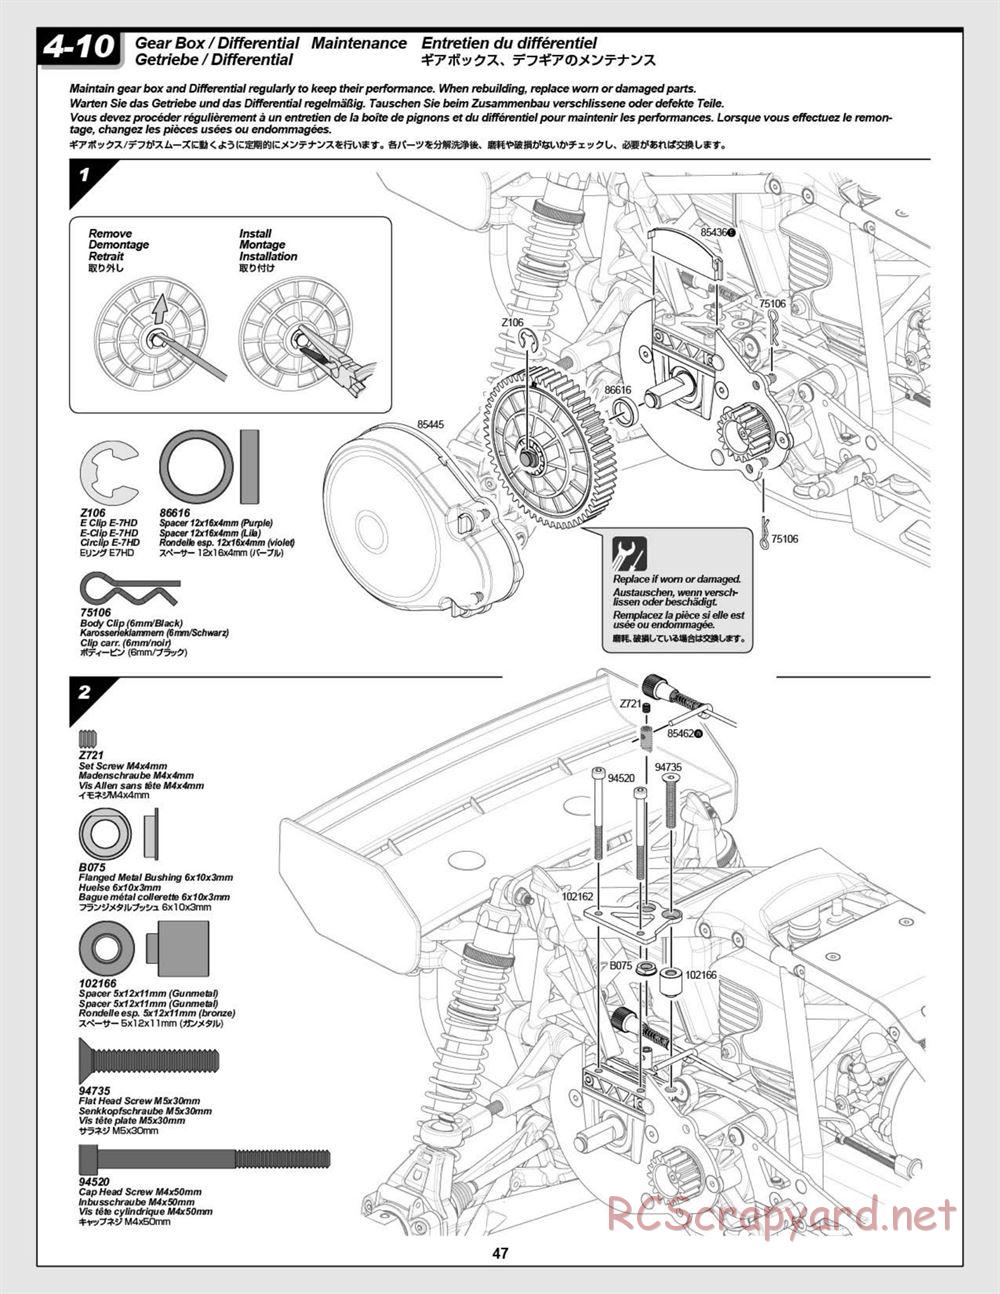 HPI - Baja 5B 2.0 RTR - Manual - Page 47